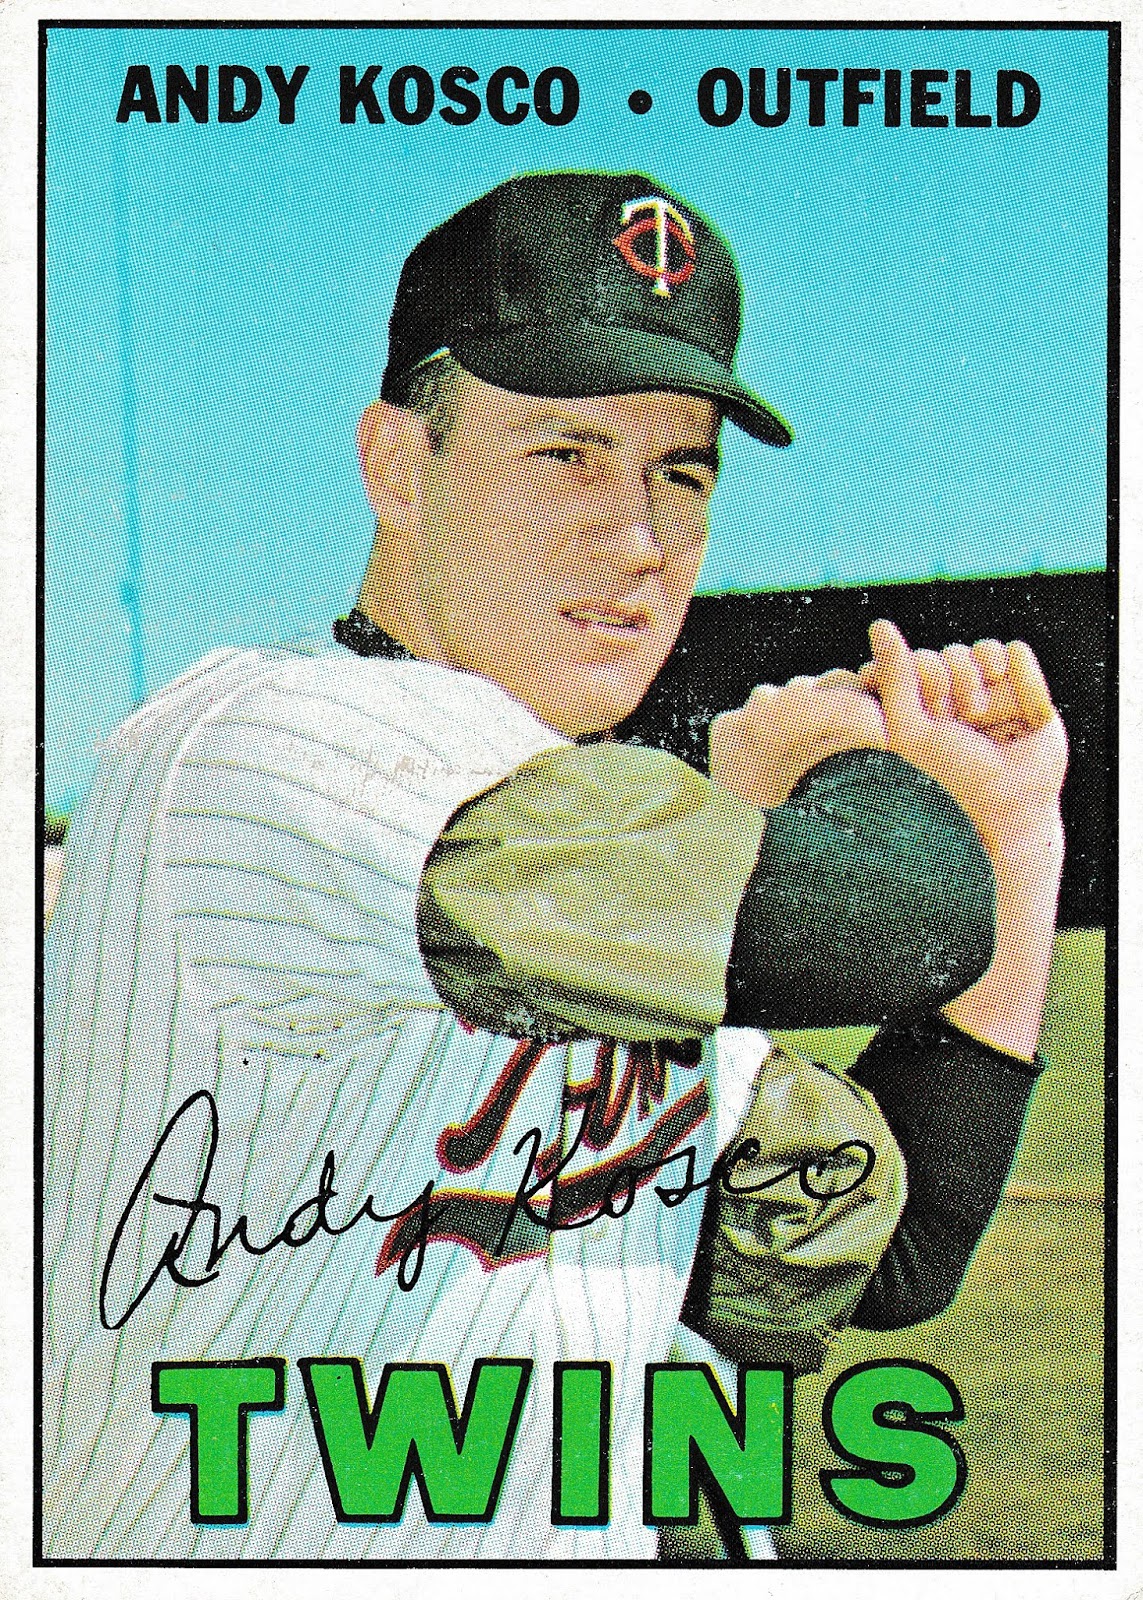 Johnny Callison, 1959 Rookie, started season as right fielder